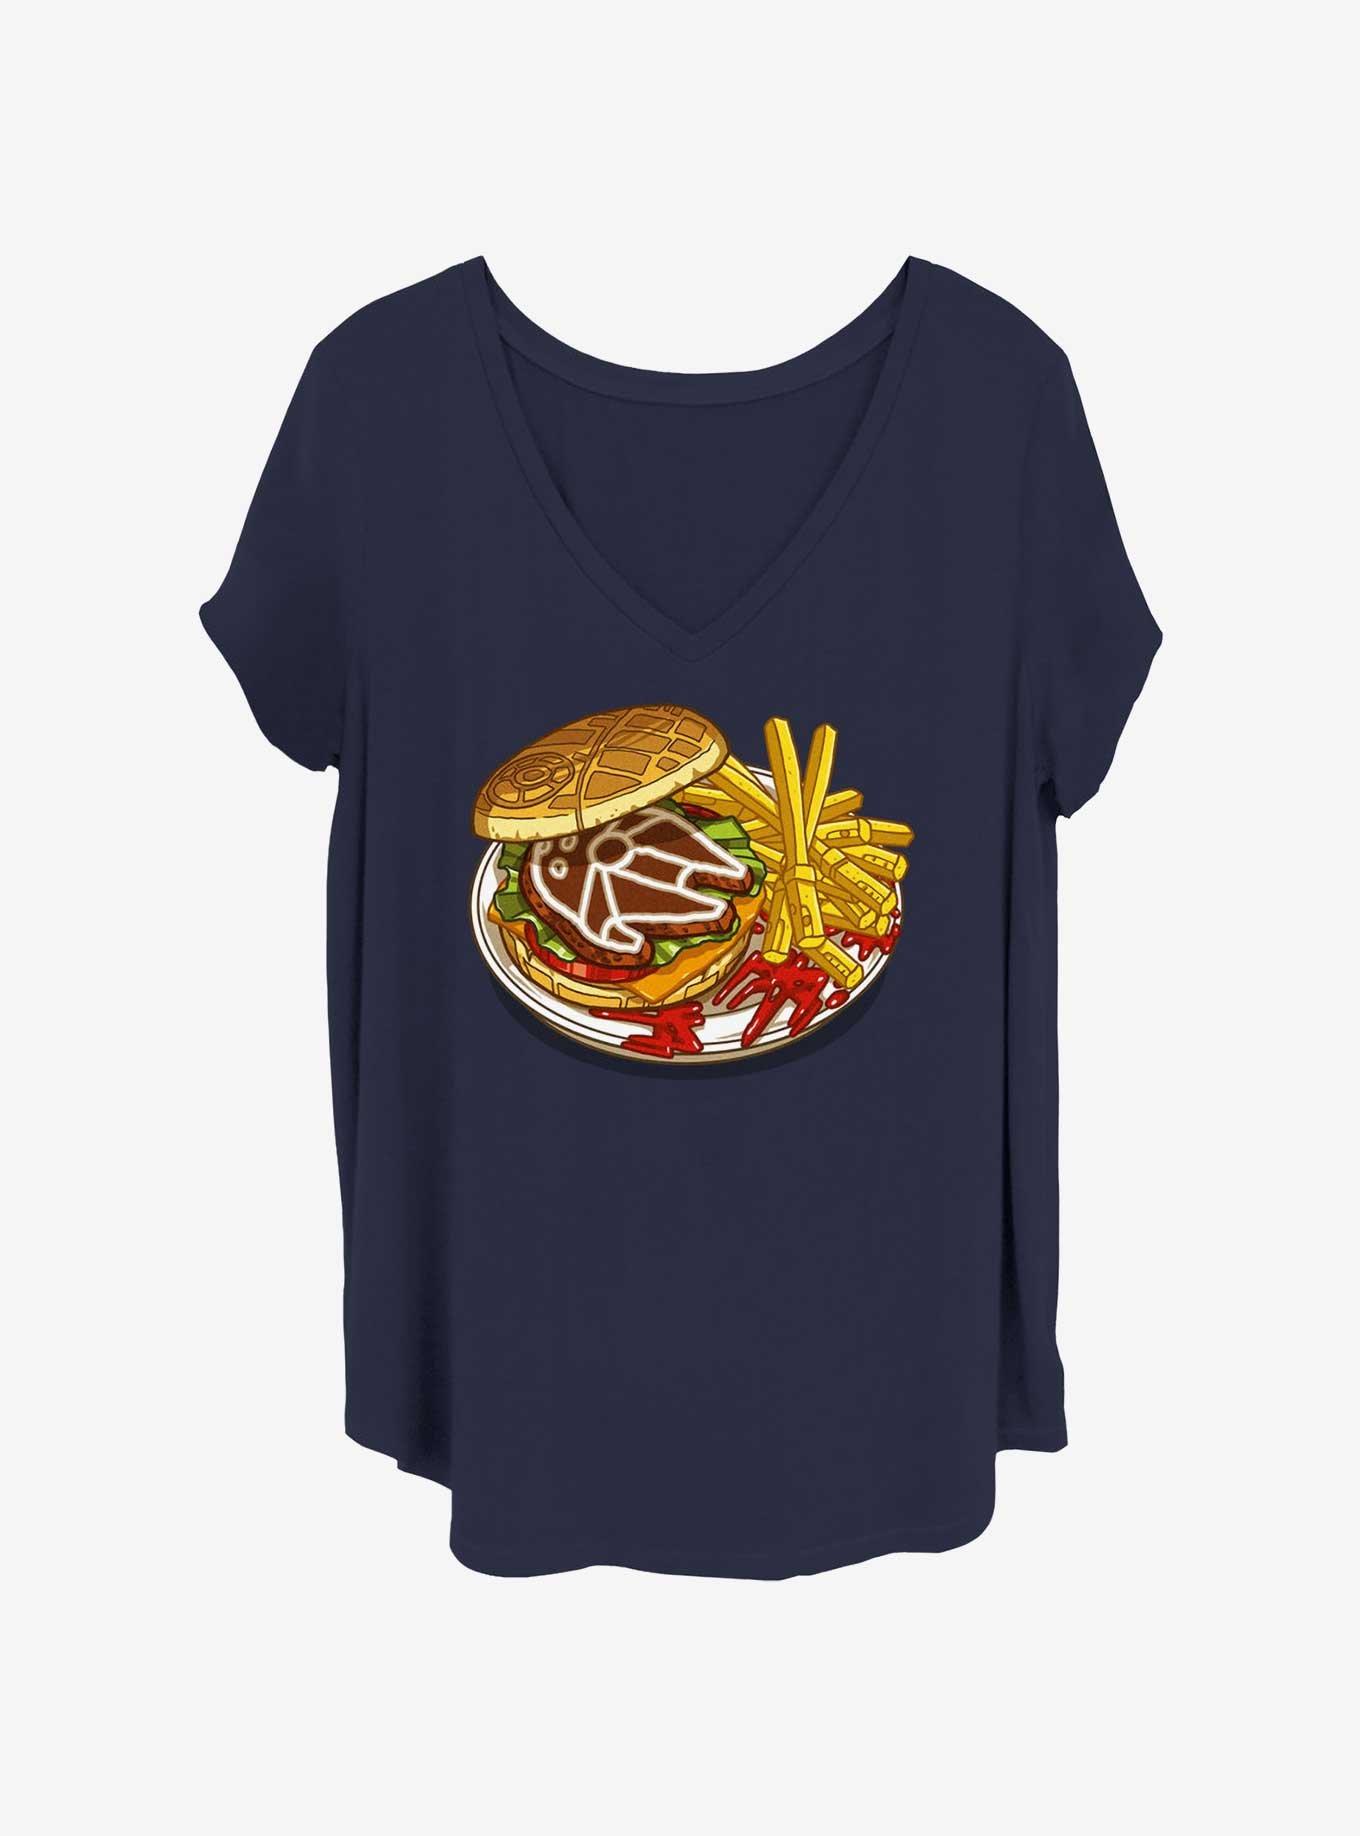 Star Wars Burger Plate Girls T-Shirt Plus